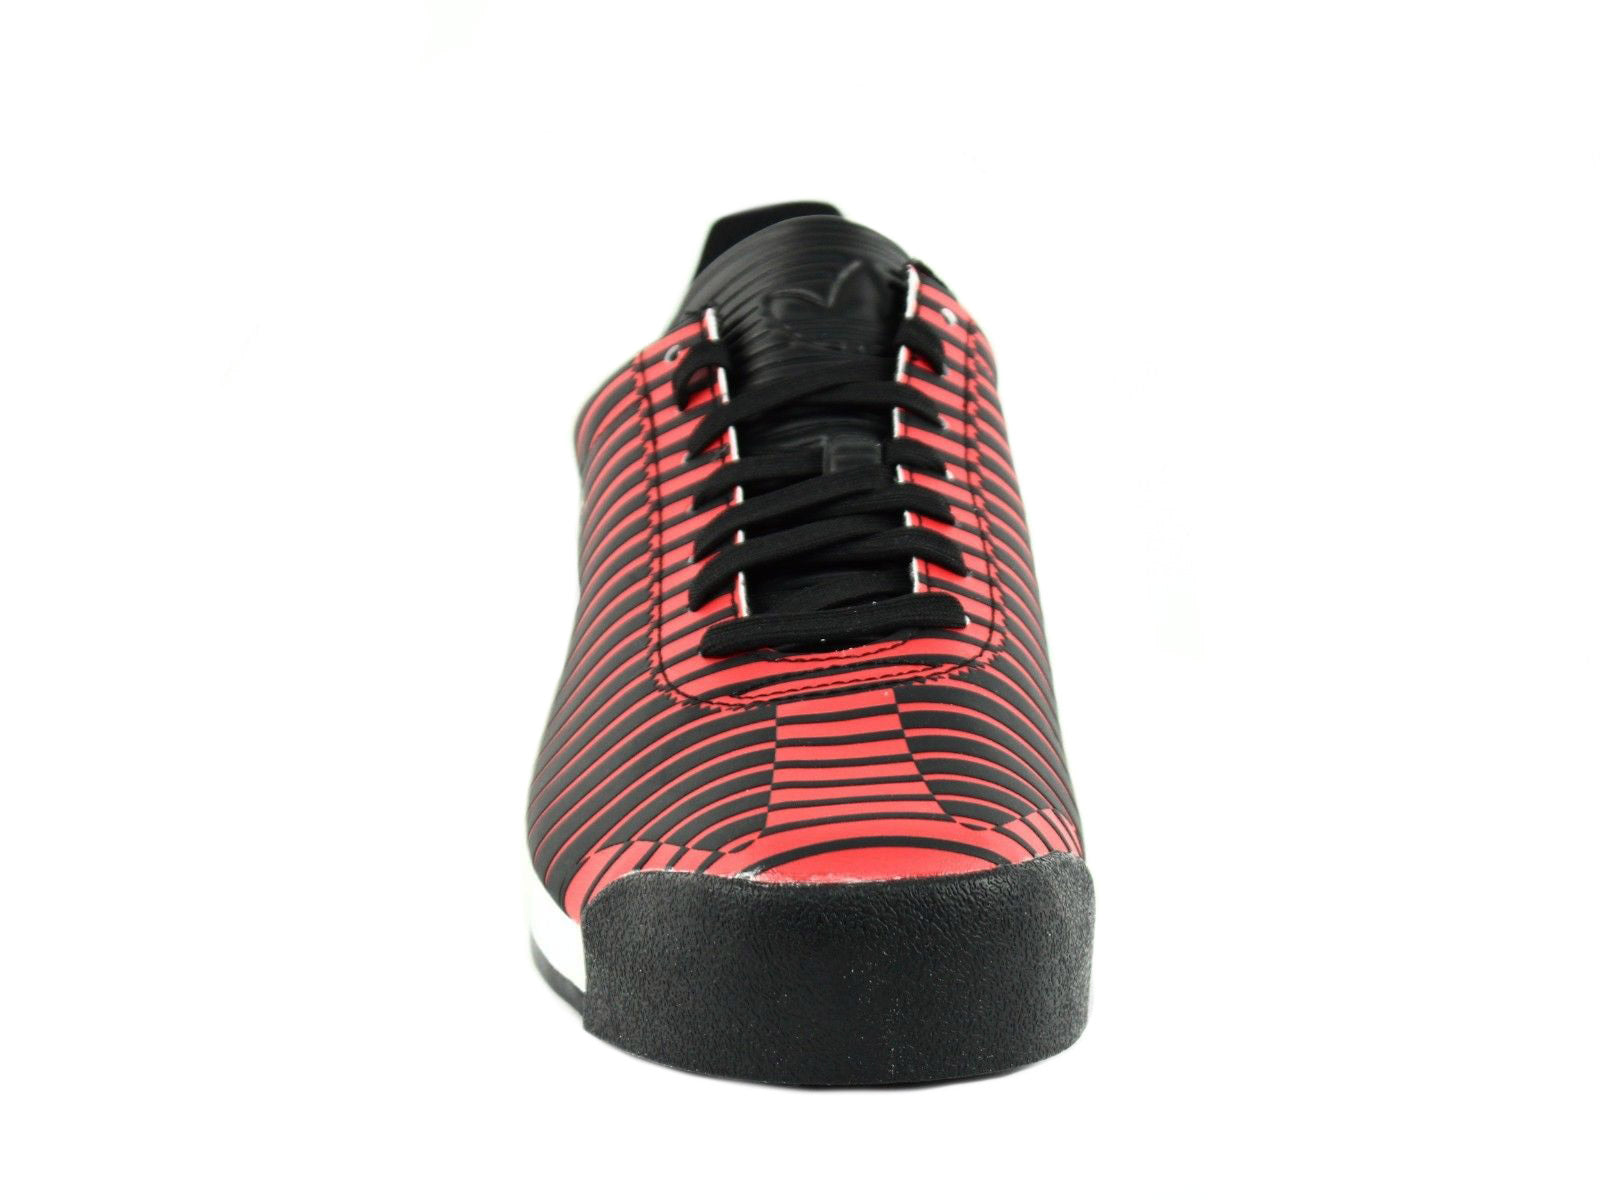 adidas samoa shoes men's black